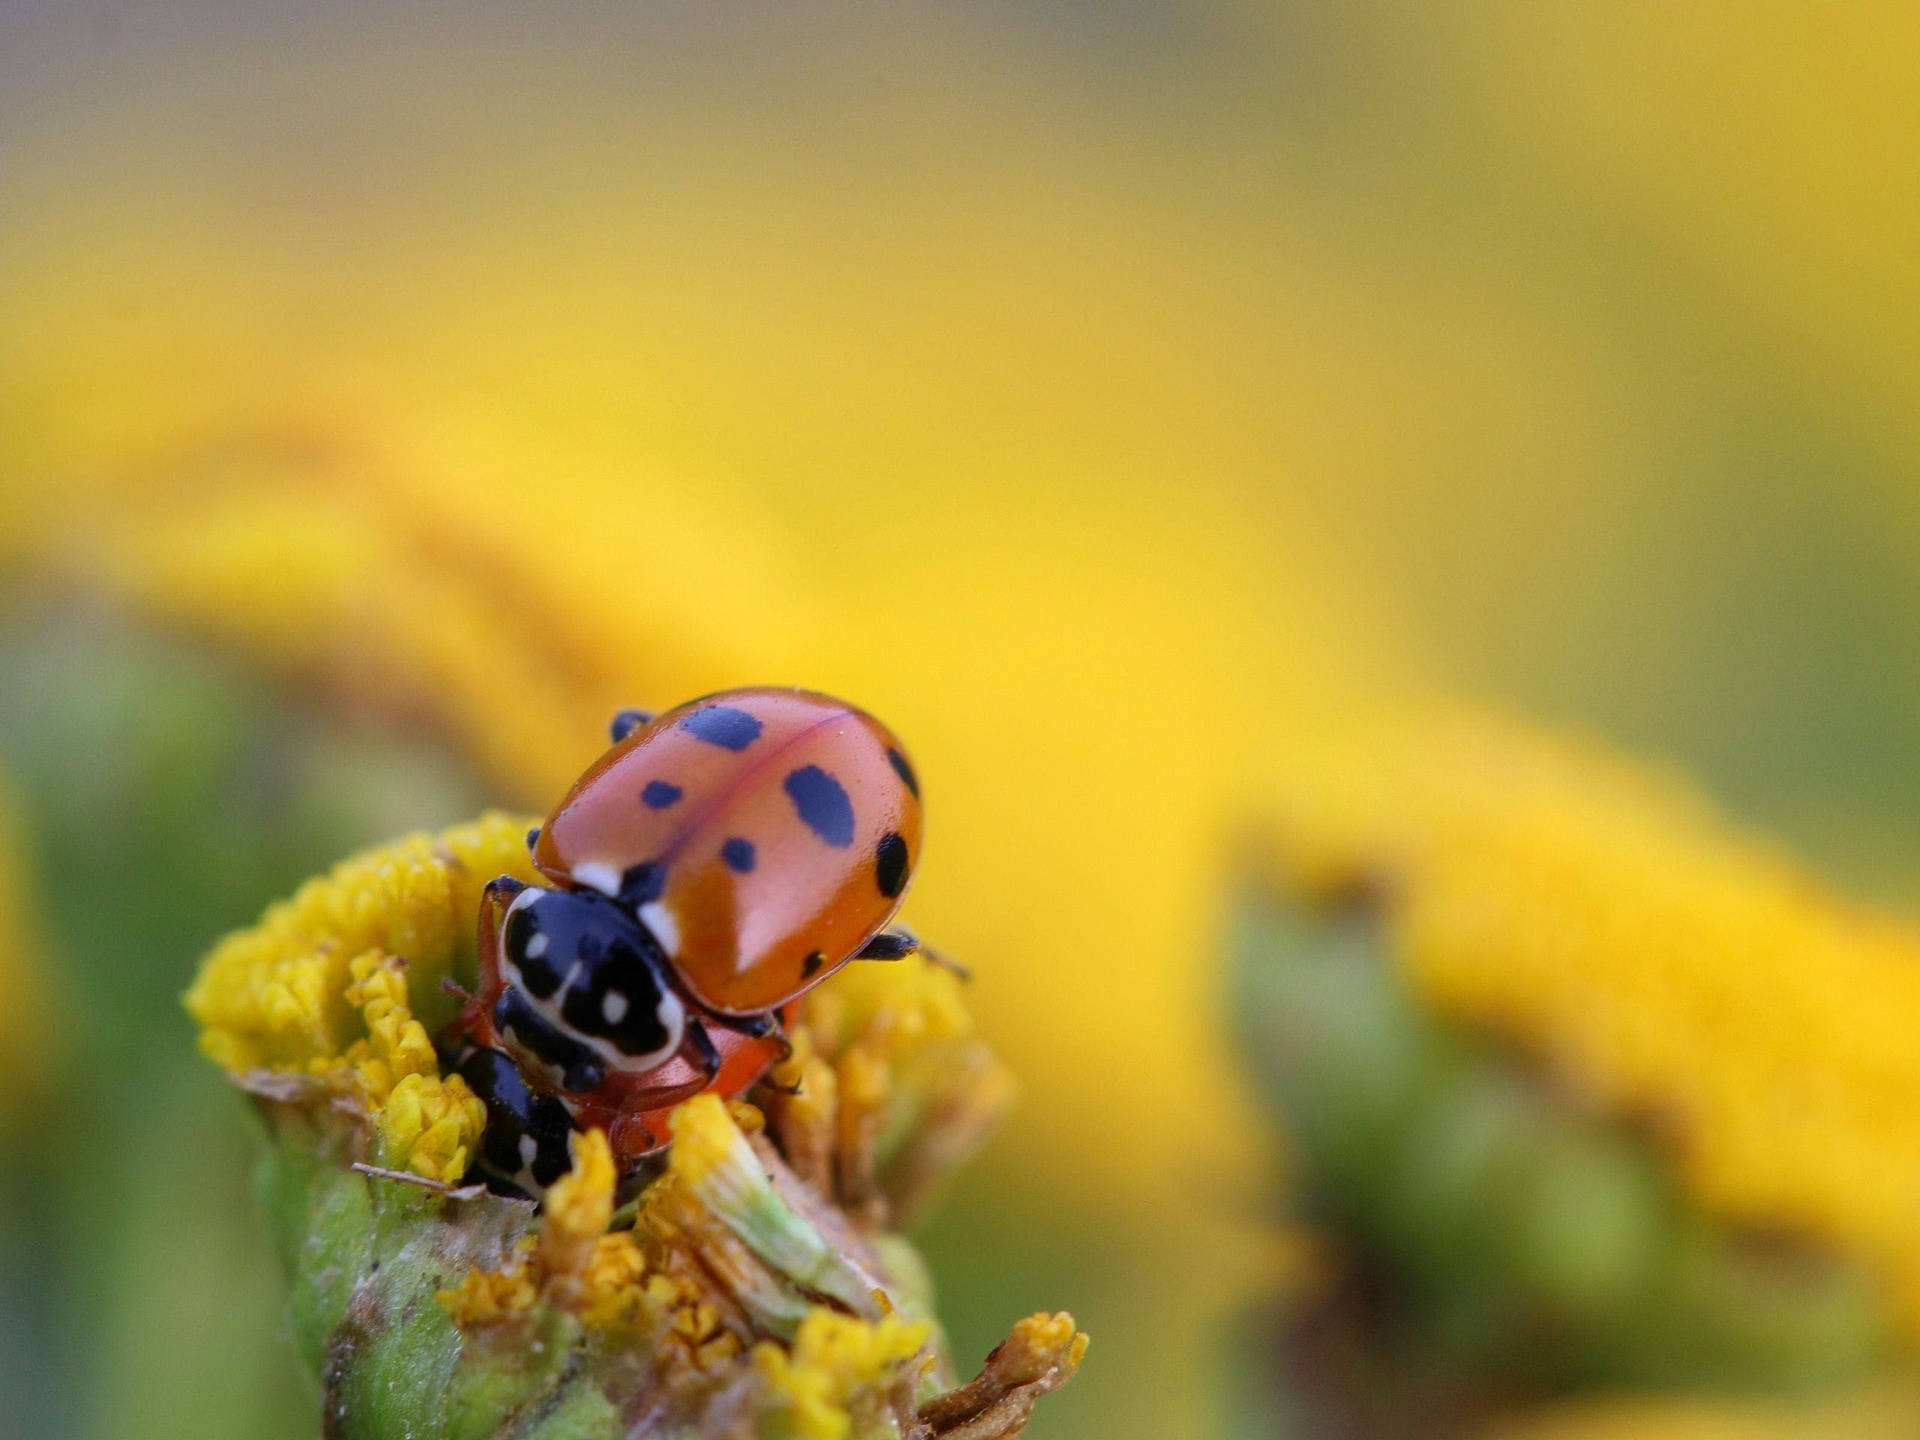 Insect Ladybug On Yellow Flower Background